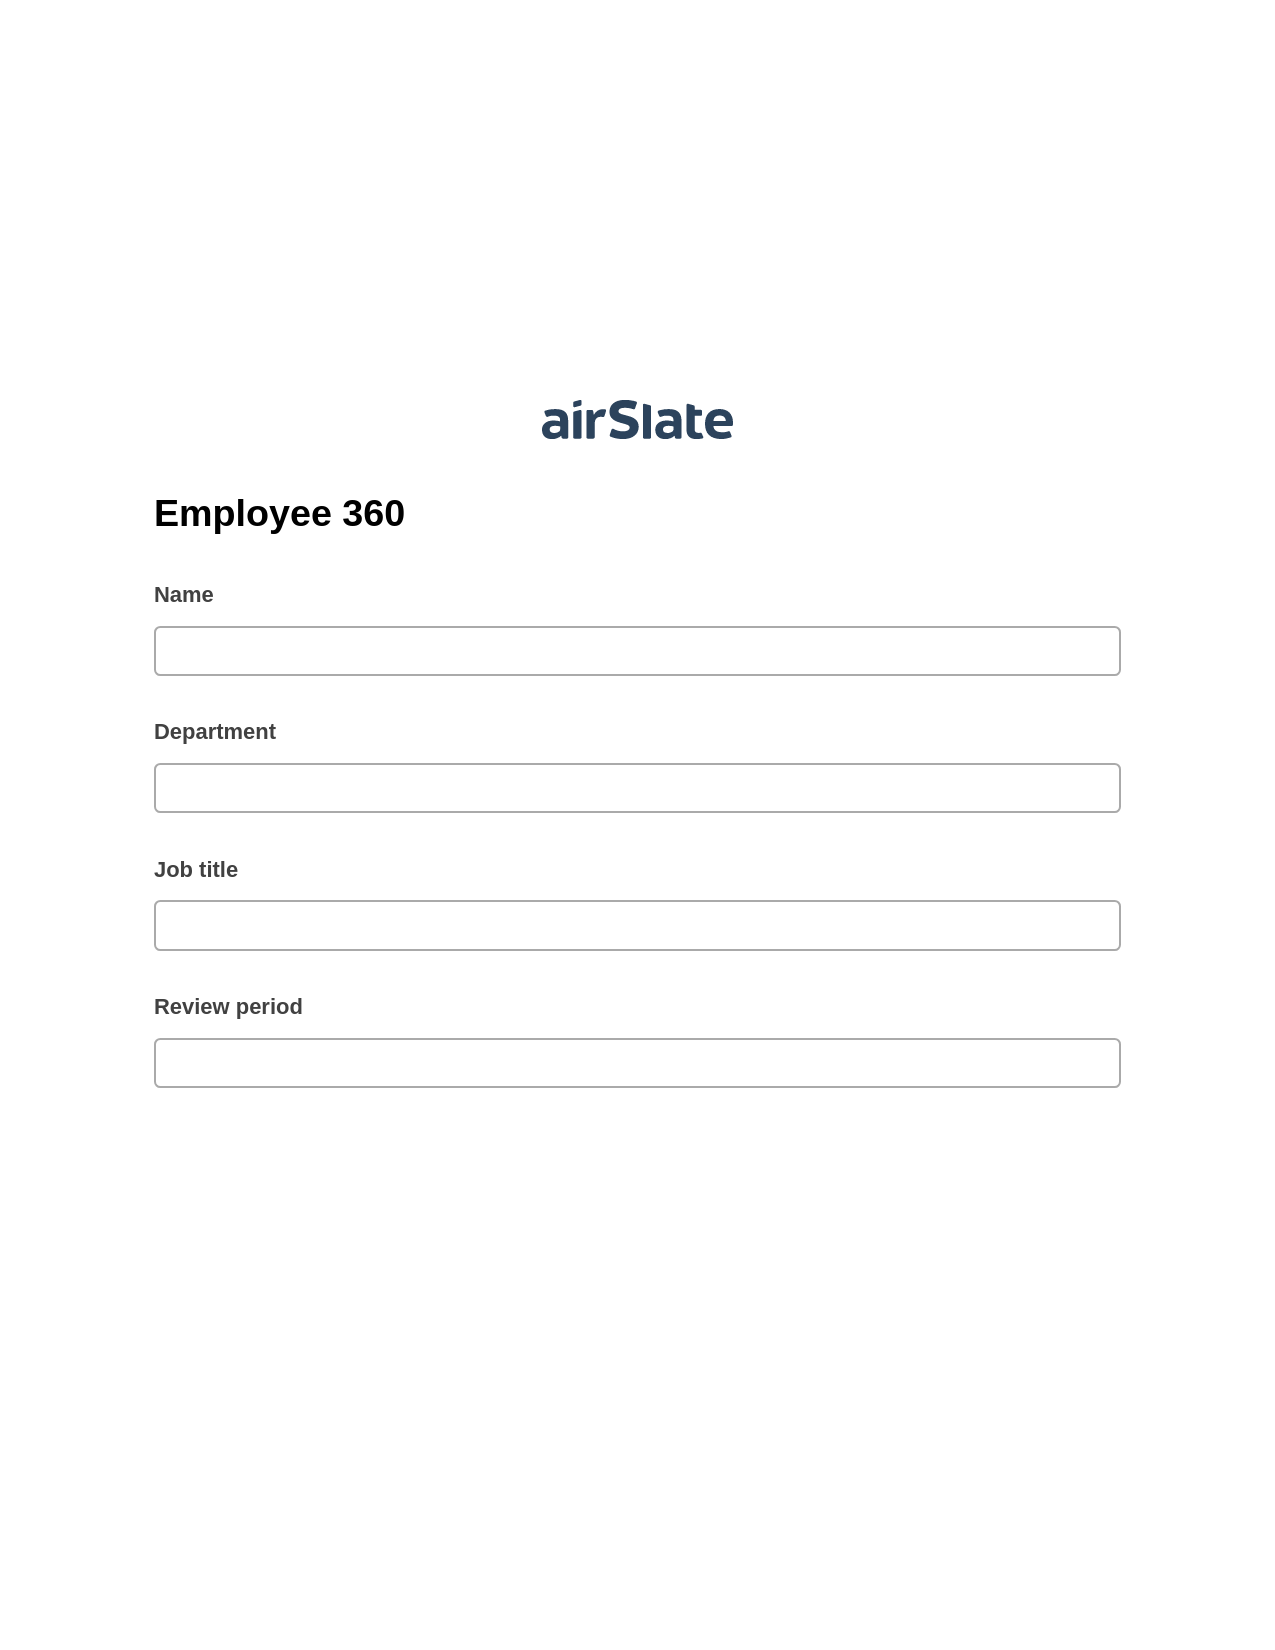 Employee 360 Pre-fill Document Bot, Invoke Salesforce Process Bot, Export to Smartsheet